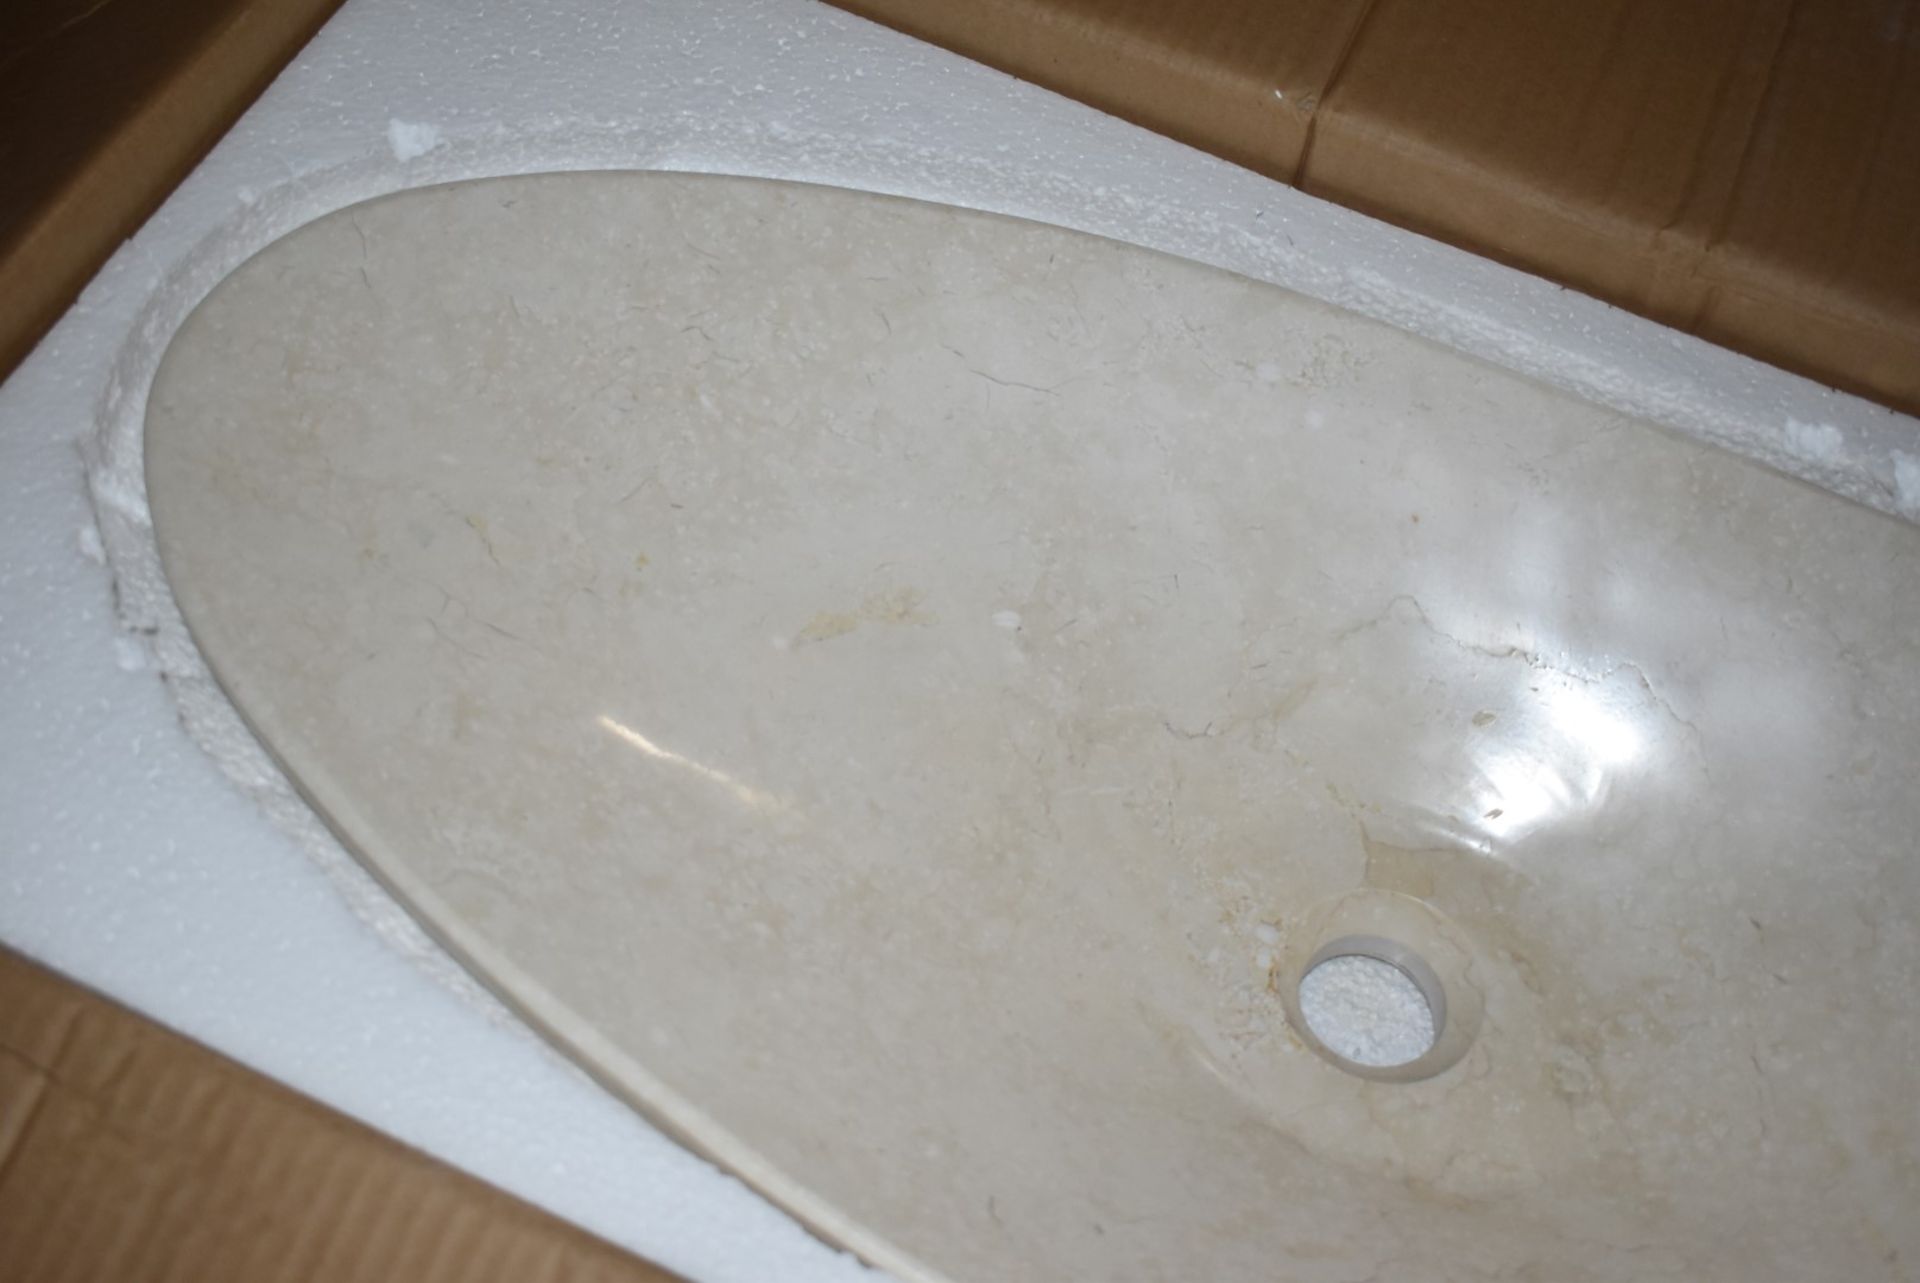 1 x Stonearth 'Cyra' Black Galala Marble Stone Countertop Sink Basin - New Boxed Stock - RRP £ - Image 5 of 7